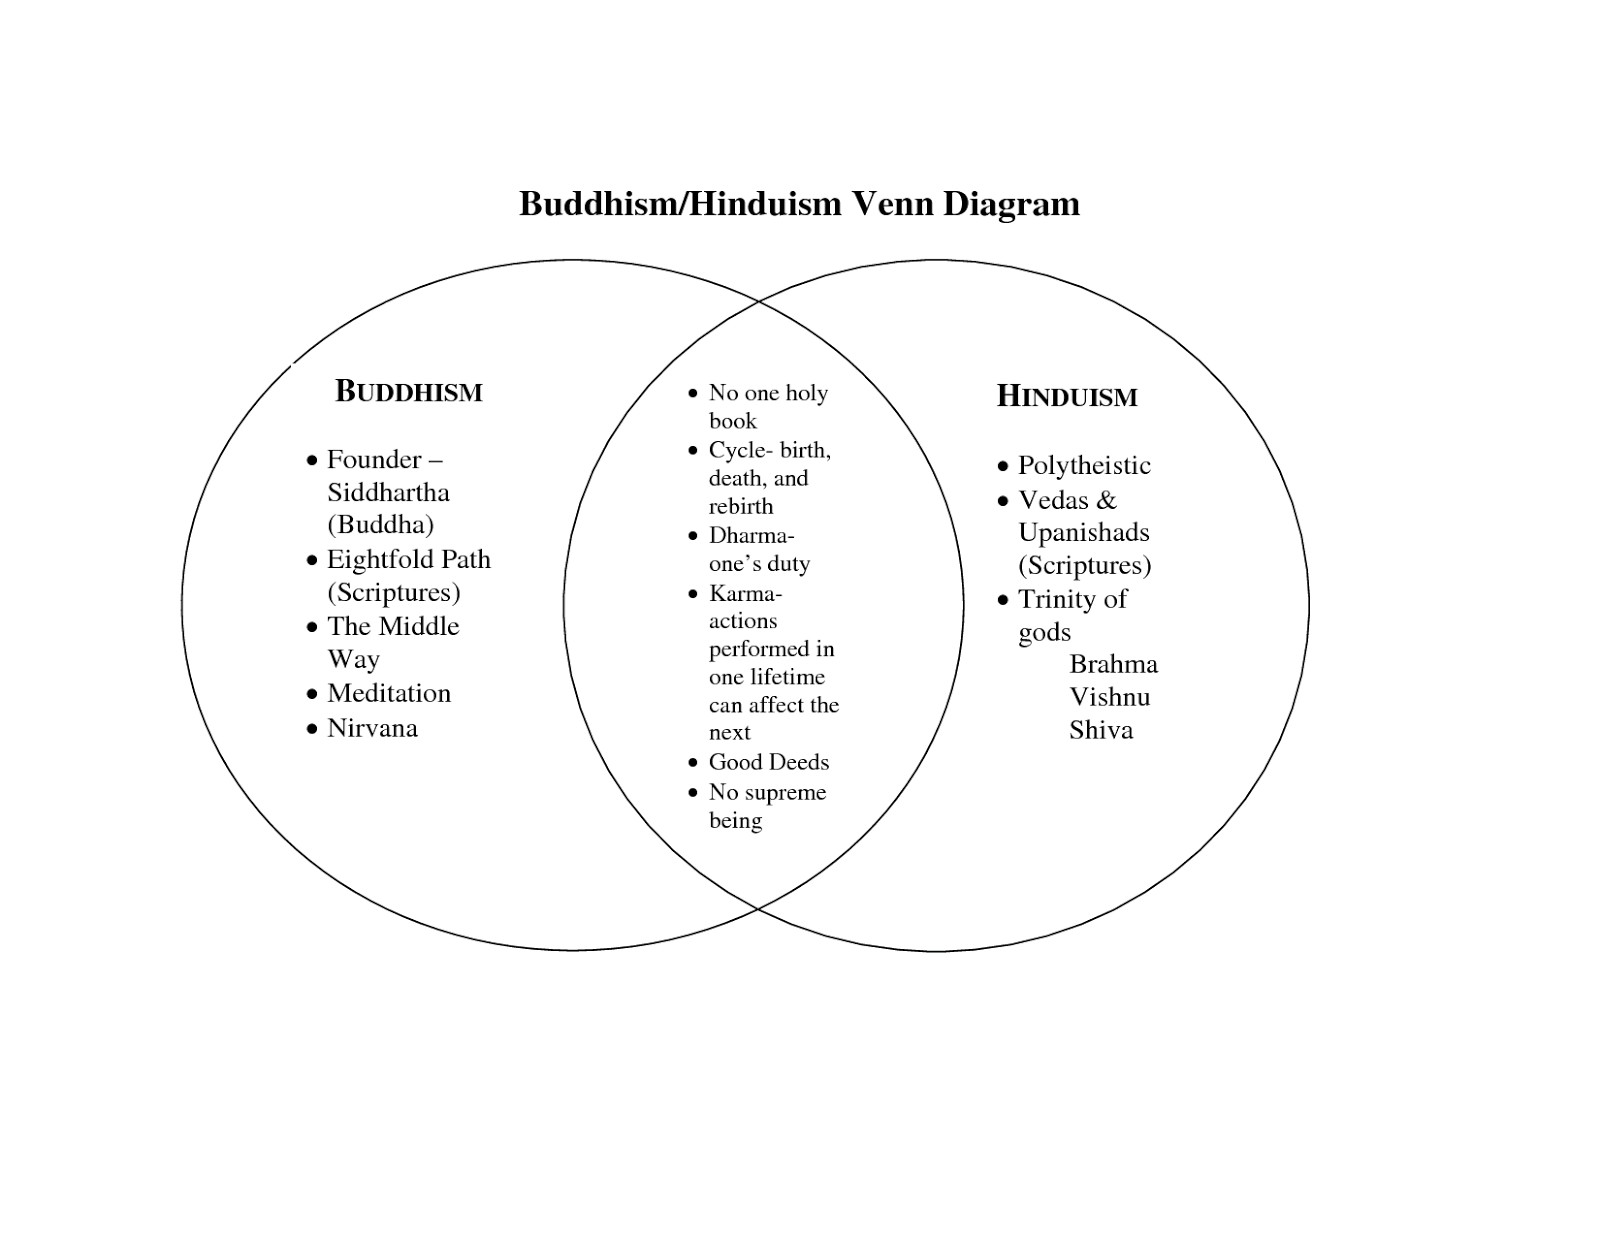 Compare buddhism hinduism essay